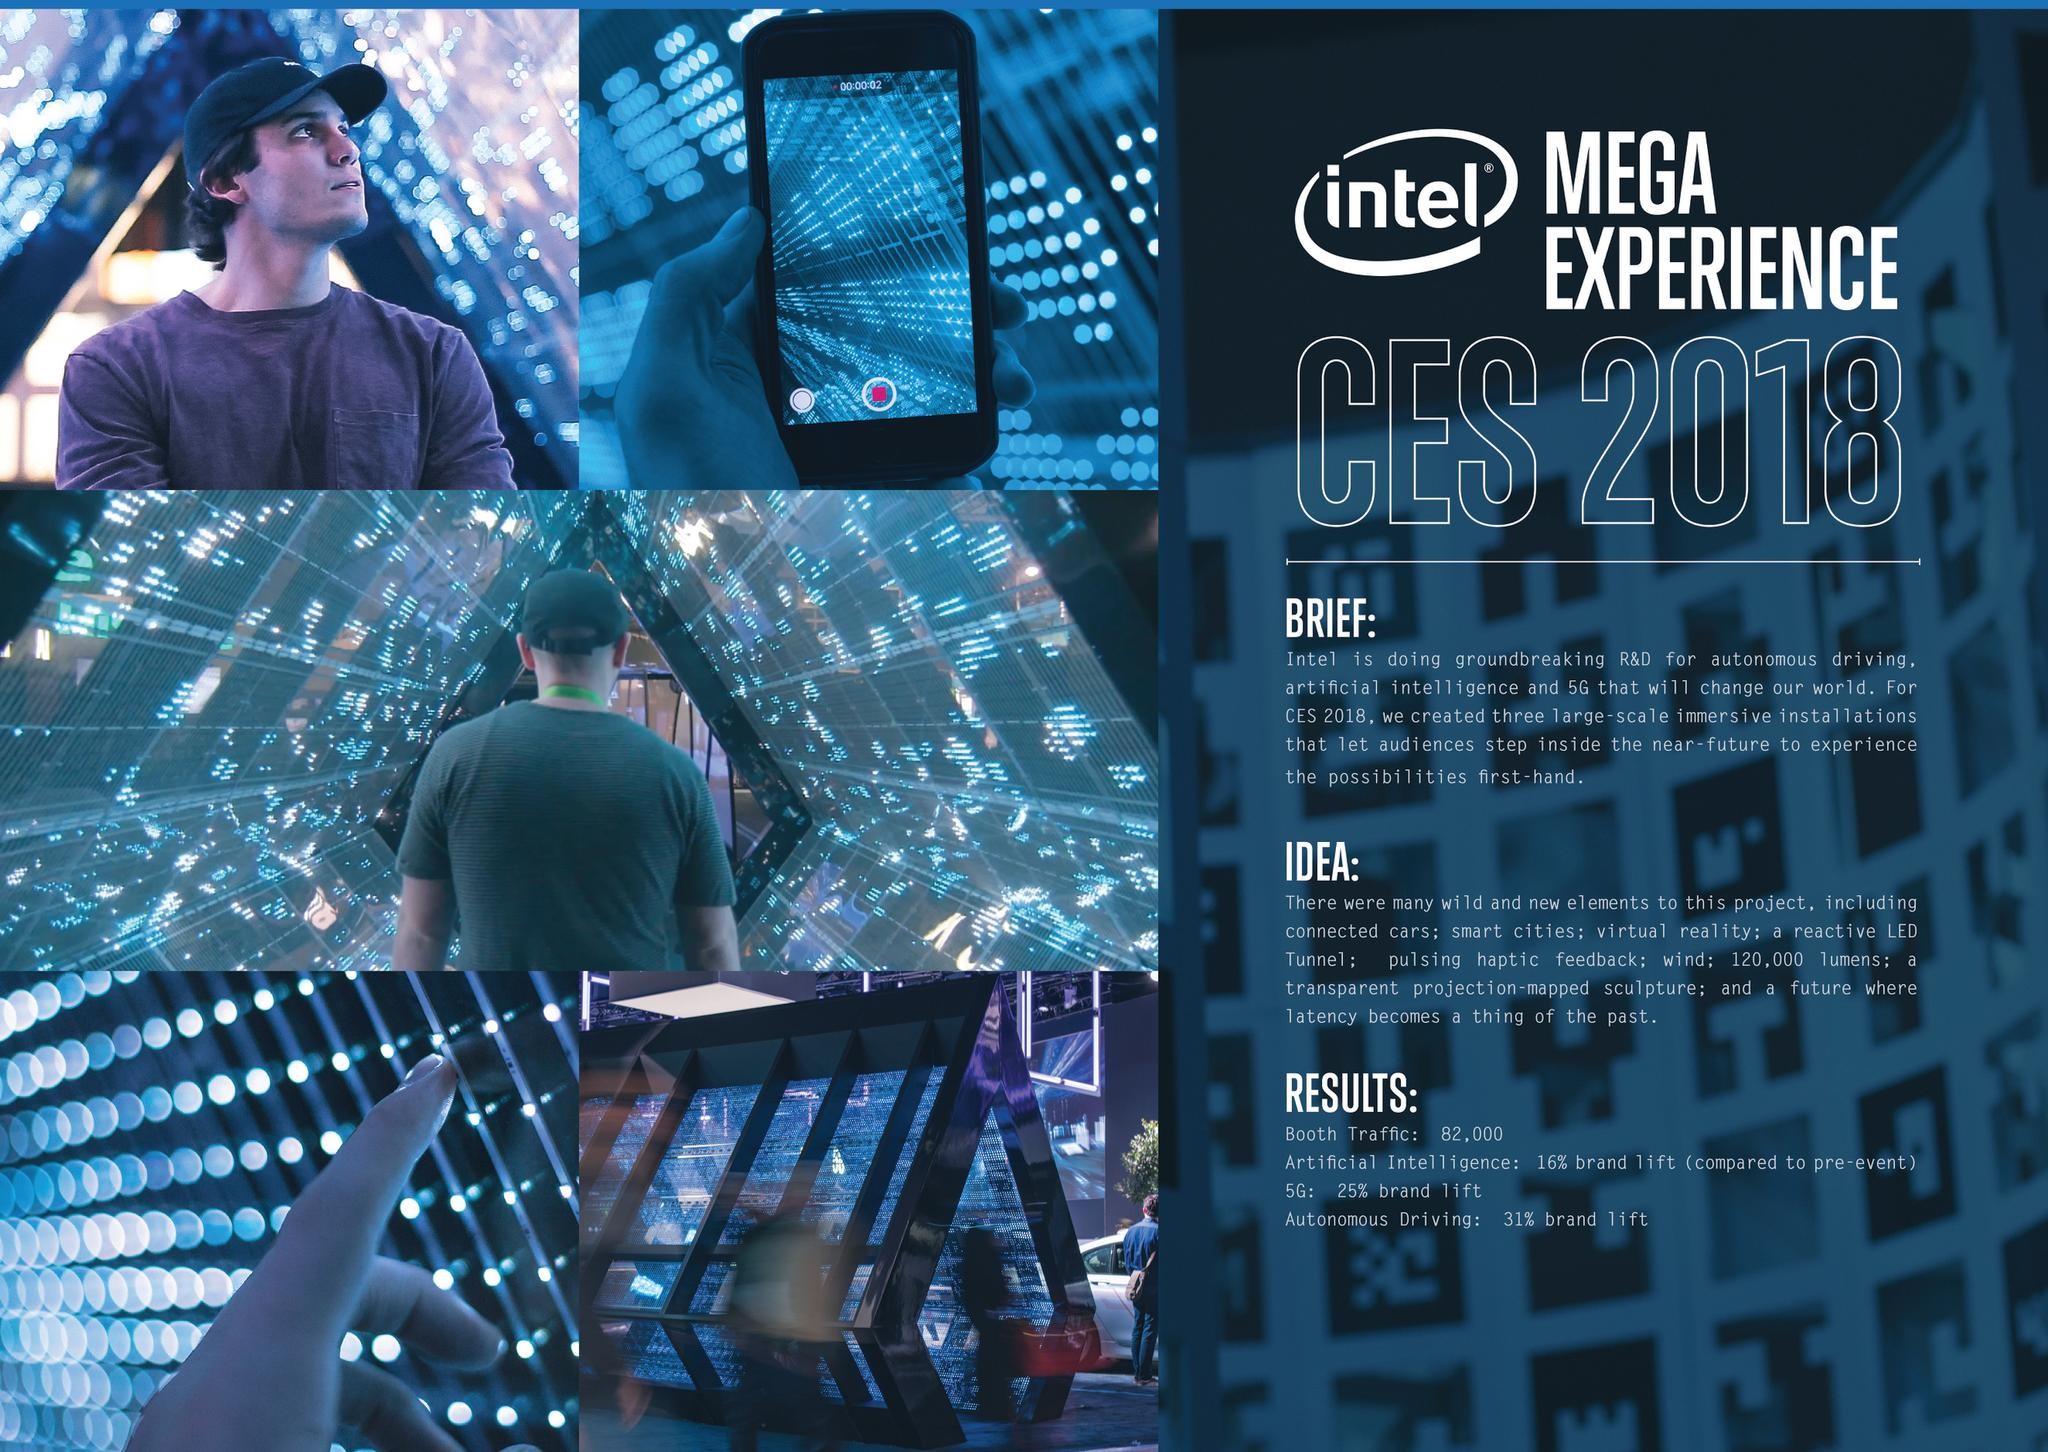 Intel Mega Experience - CES 2018